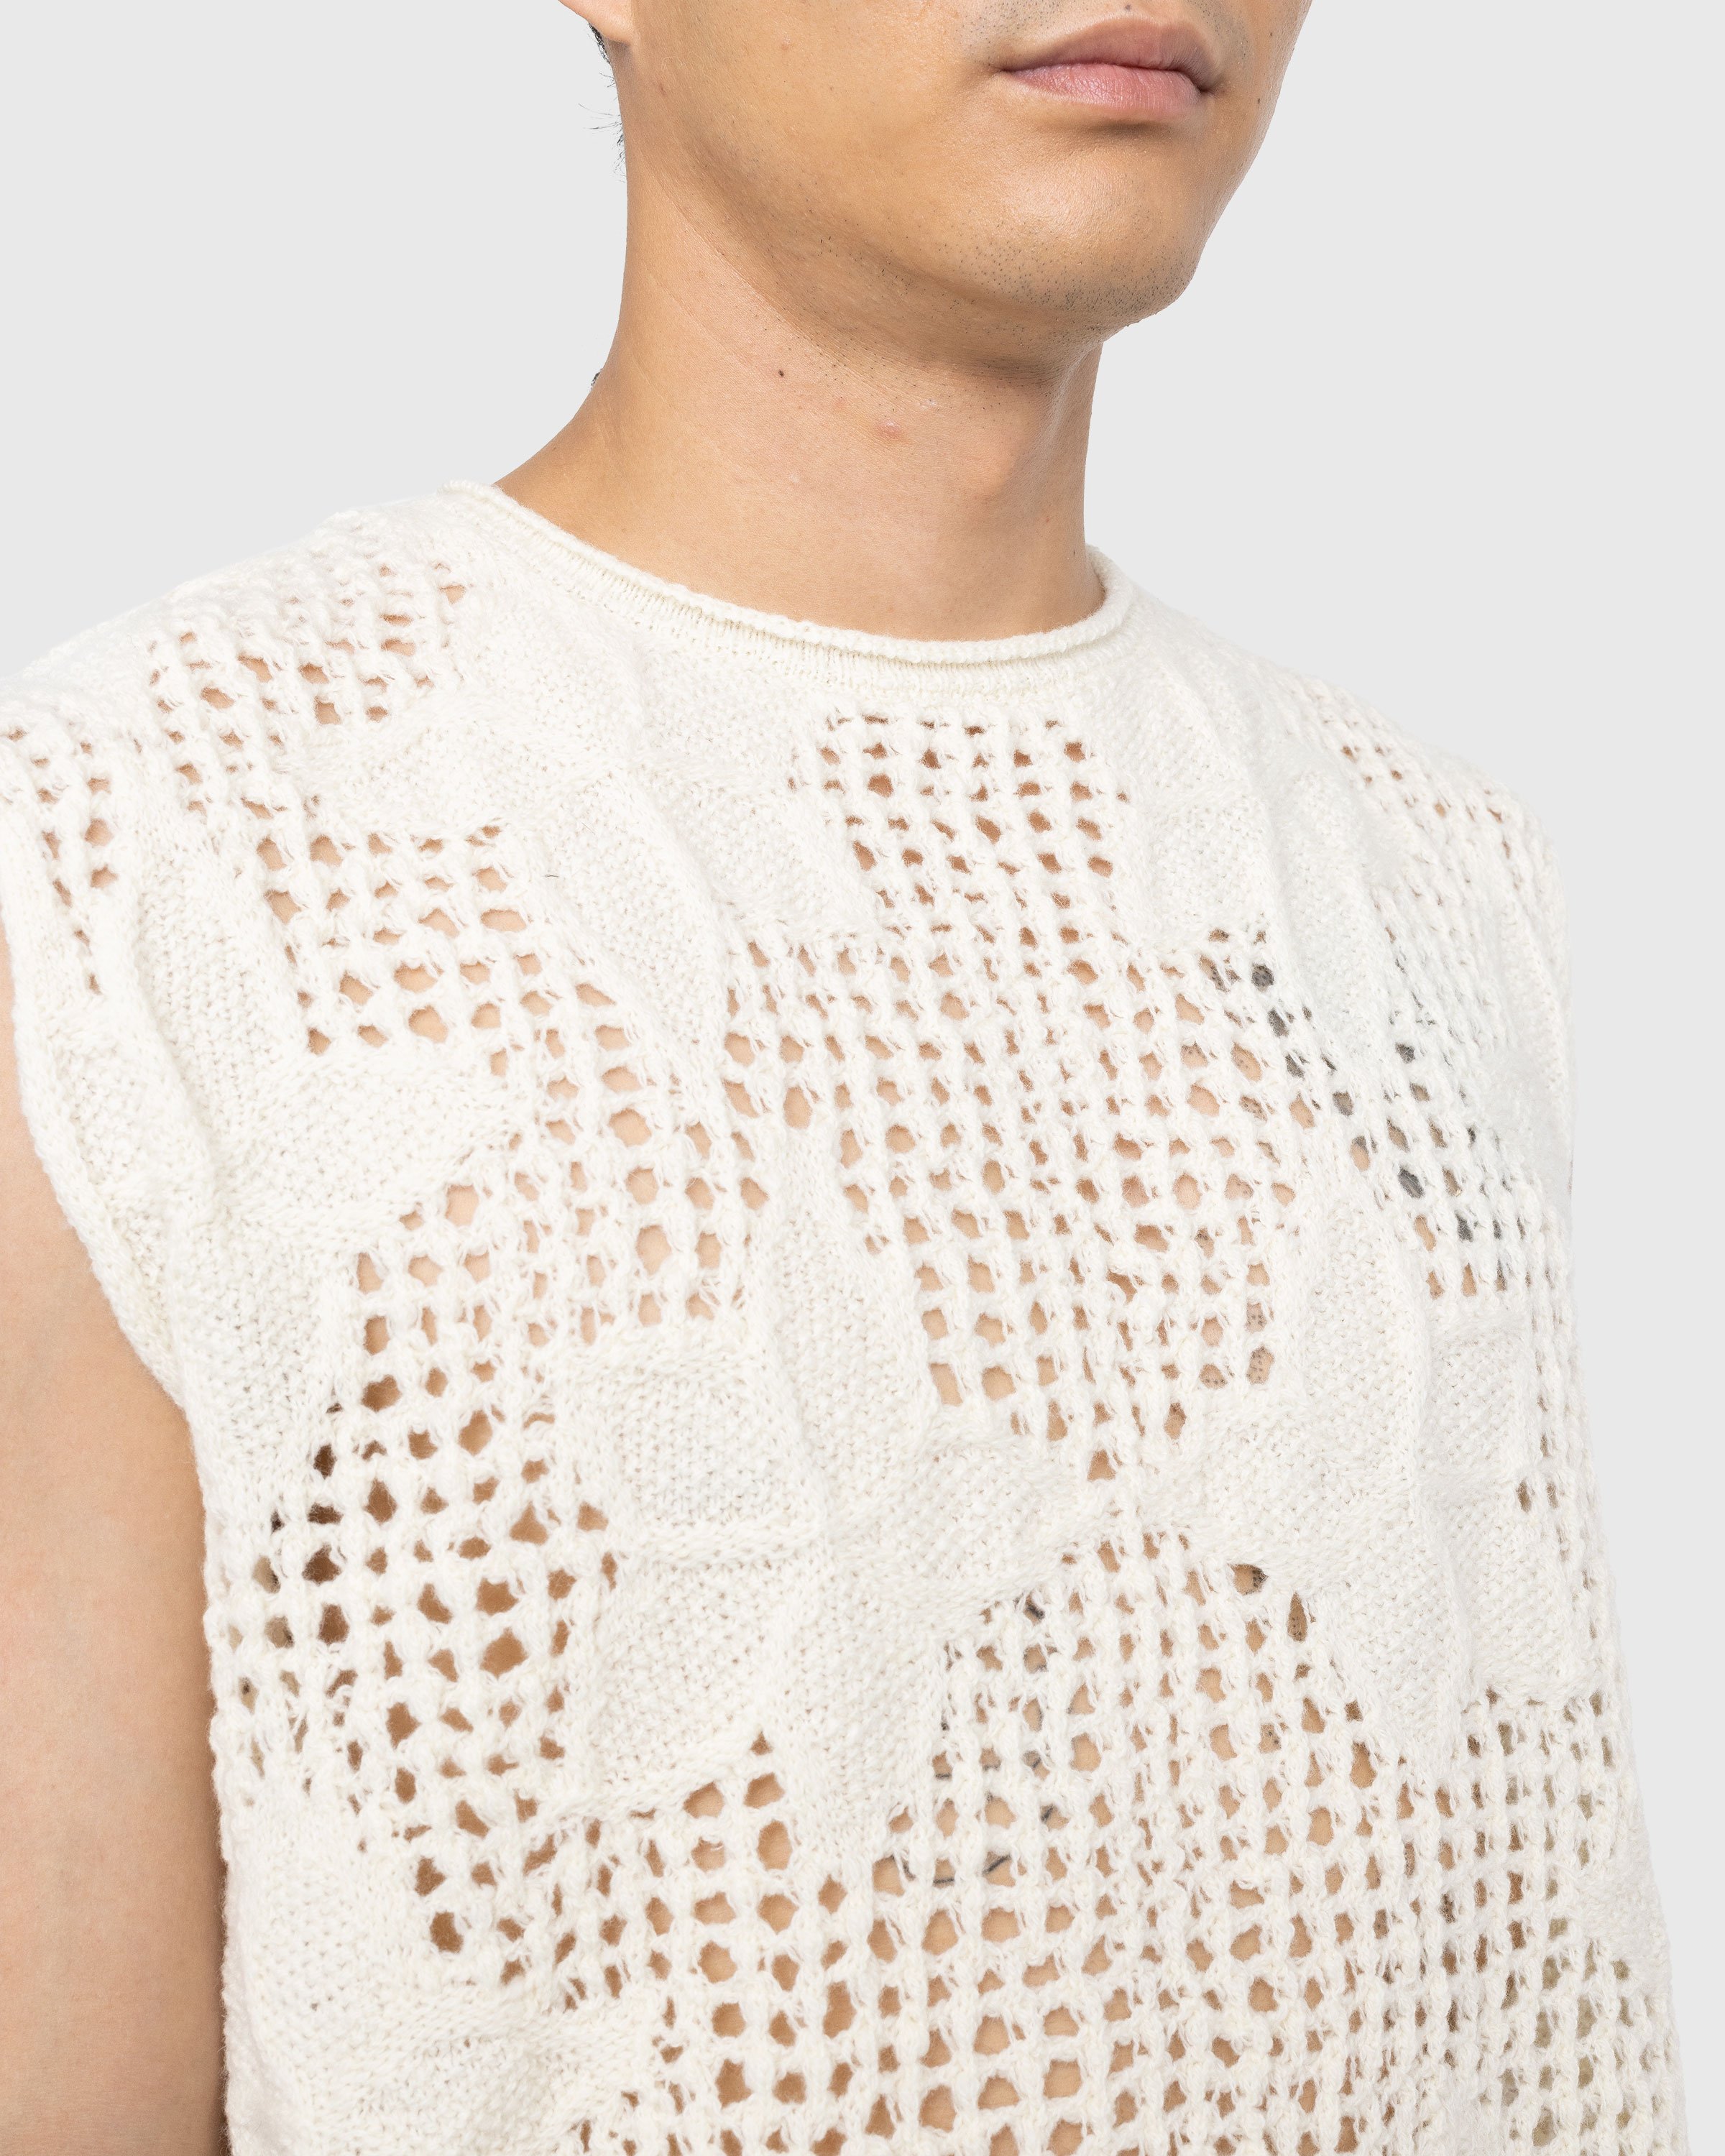 Dries van Noten - Meddo Knit Sweater Vest Ecru - Clothing - White - Image 4